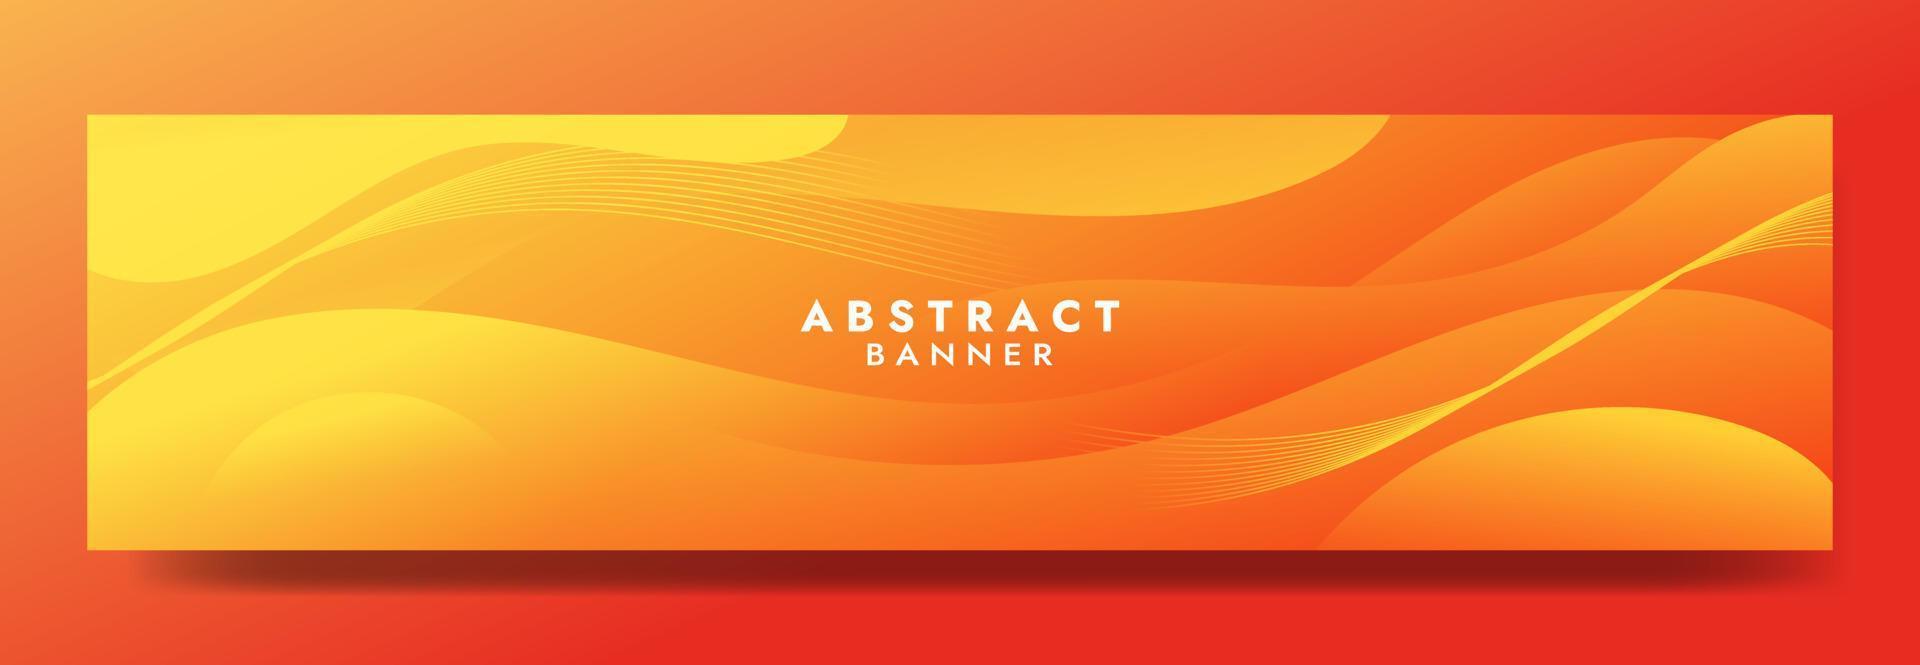 Abstract Orange Fluid Wave Banner Template vector